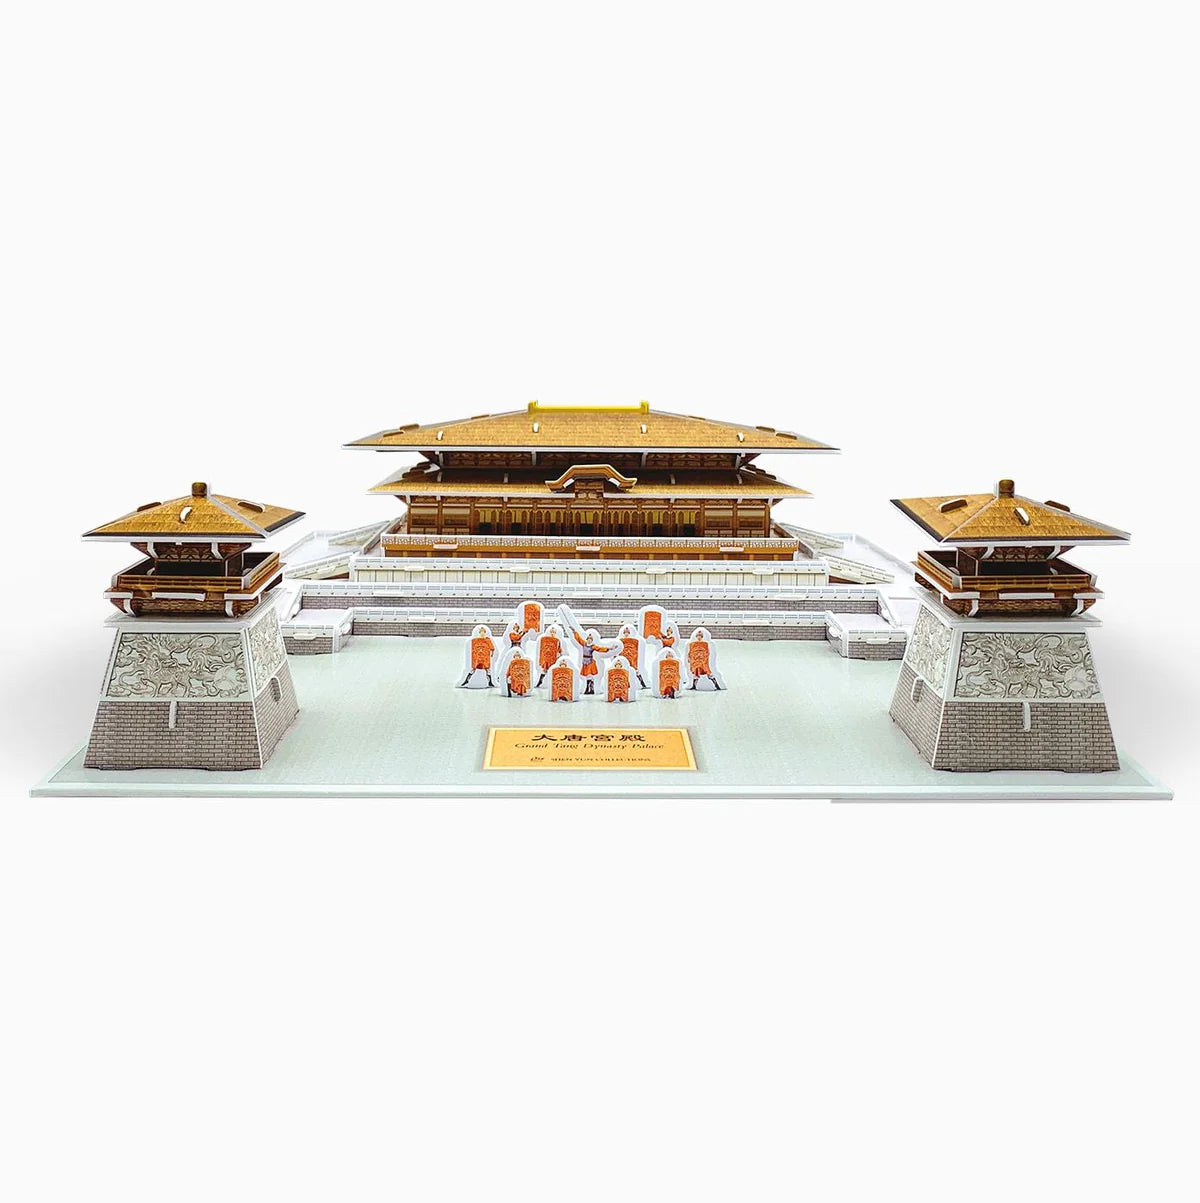 Grand Tang Palace 3D Puzzle